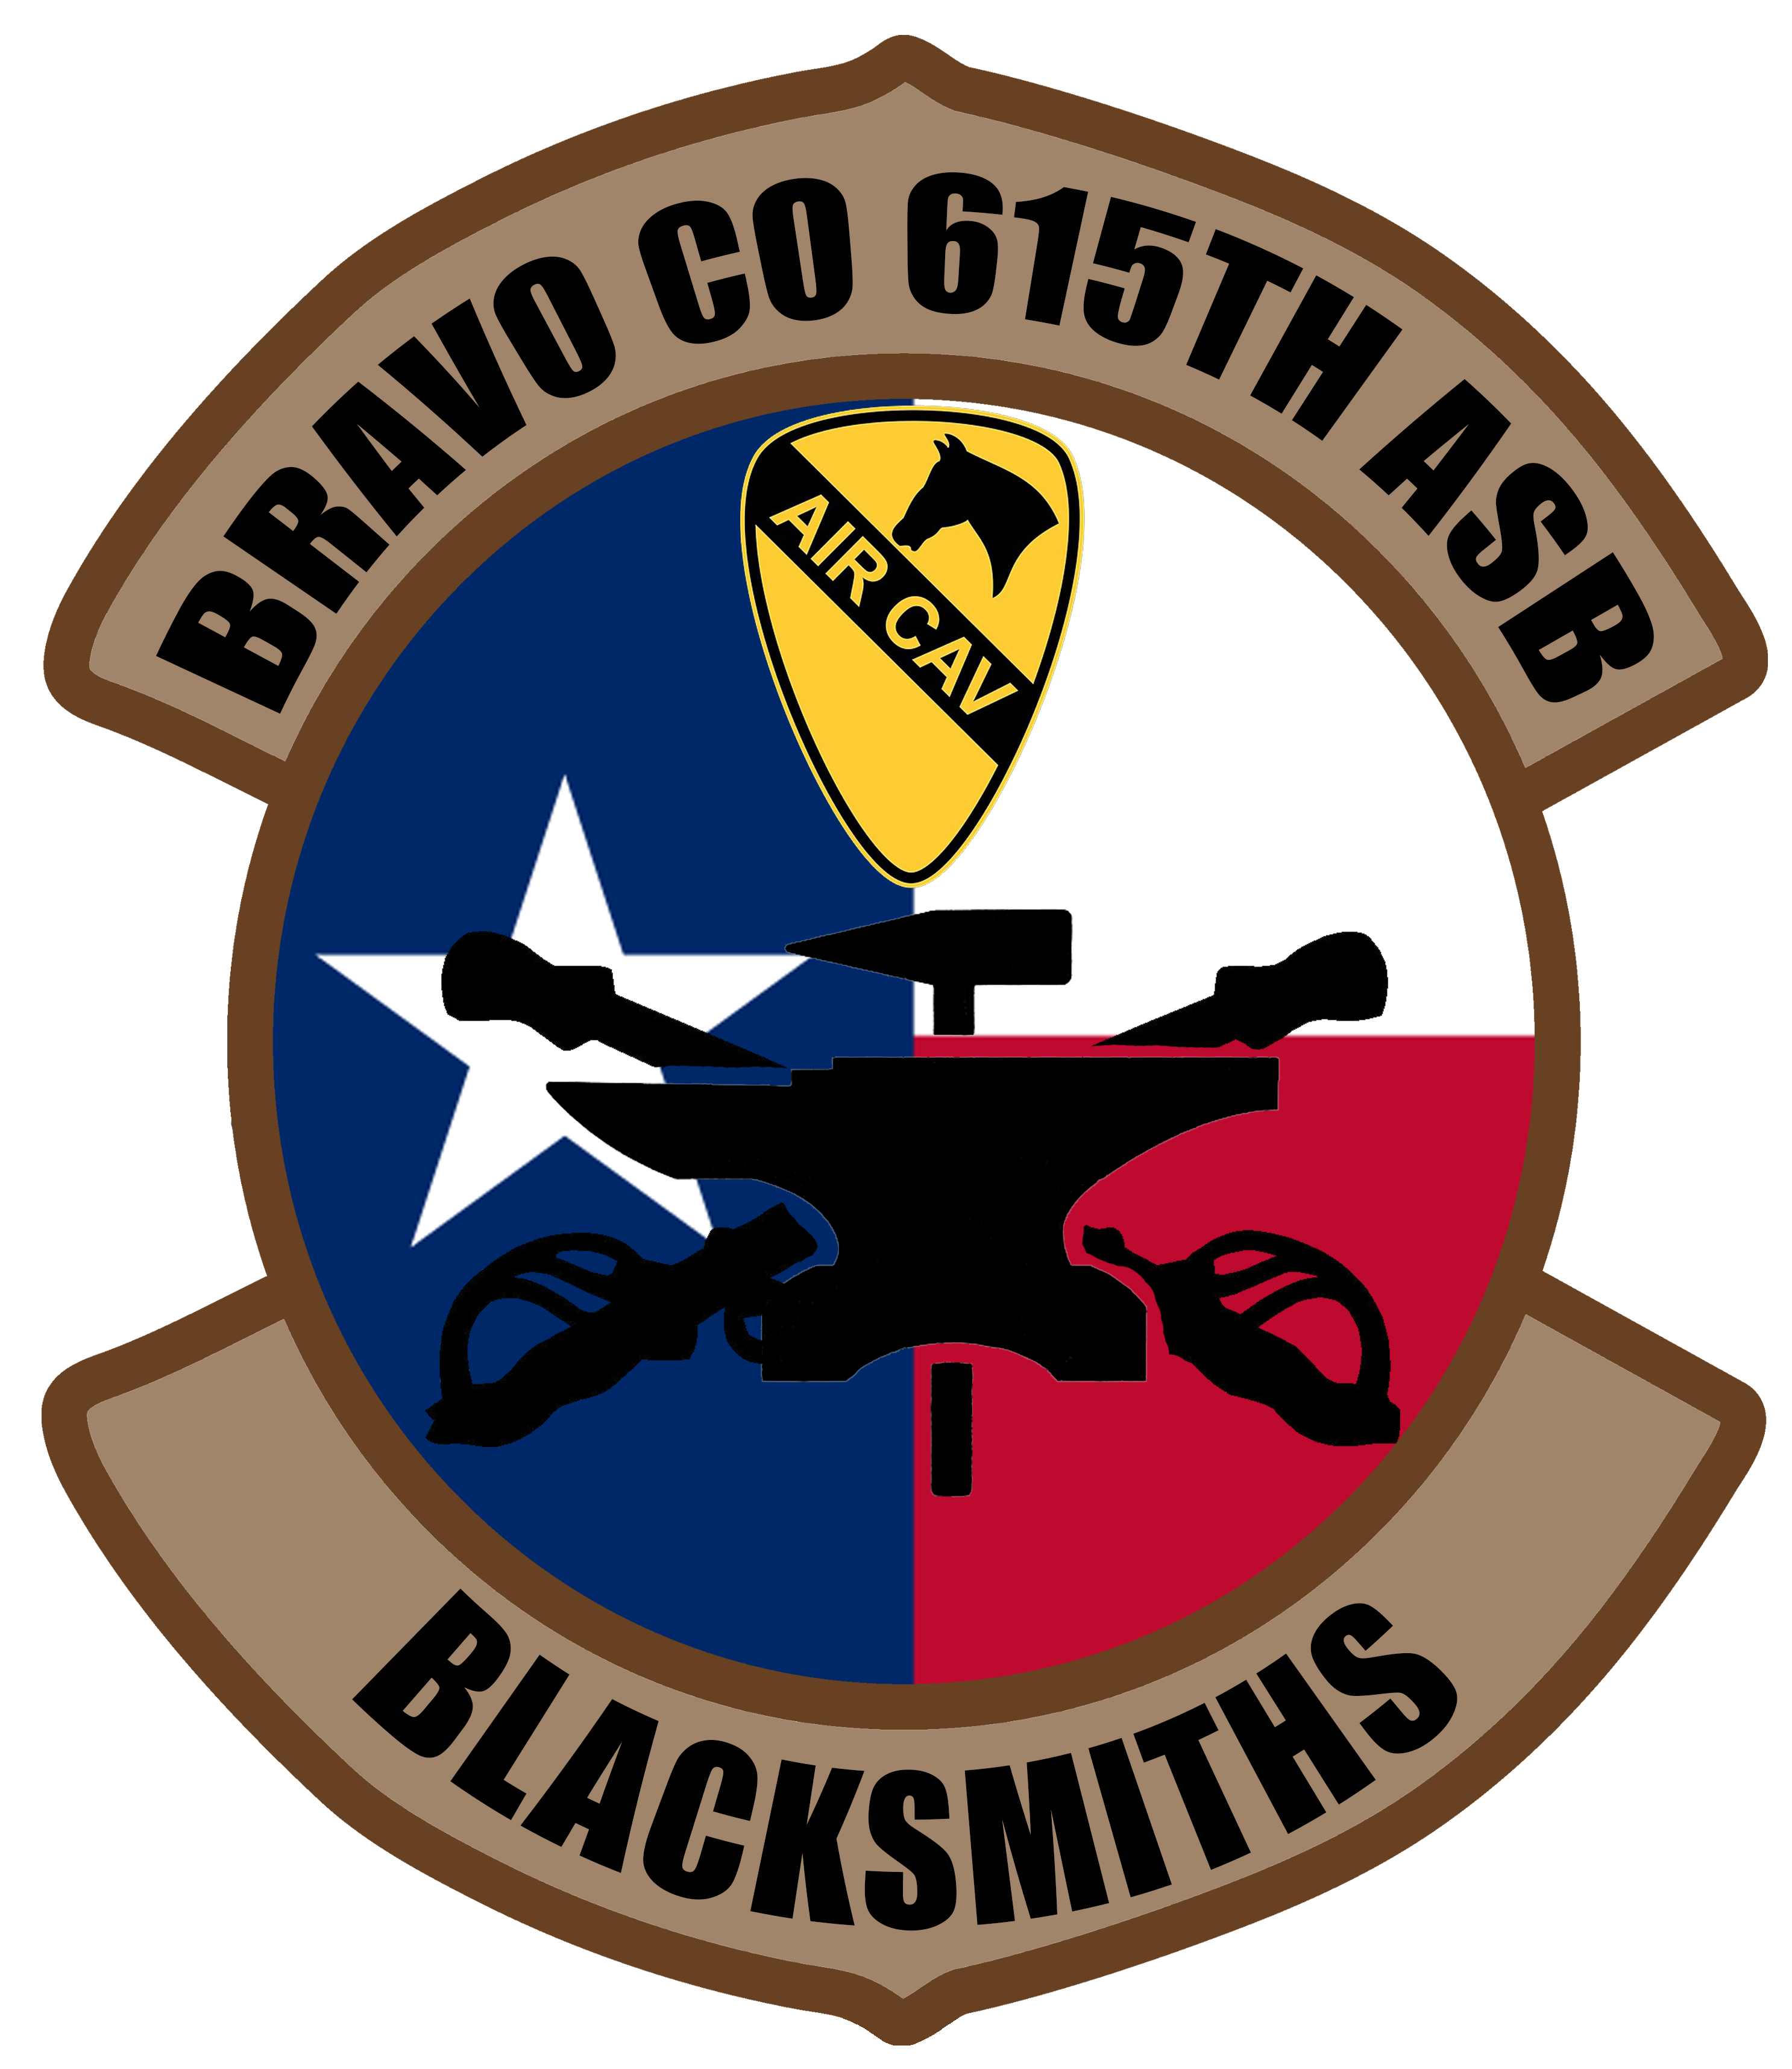 B Co, 615 ASB "Blacksmiths"